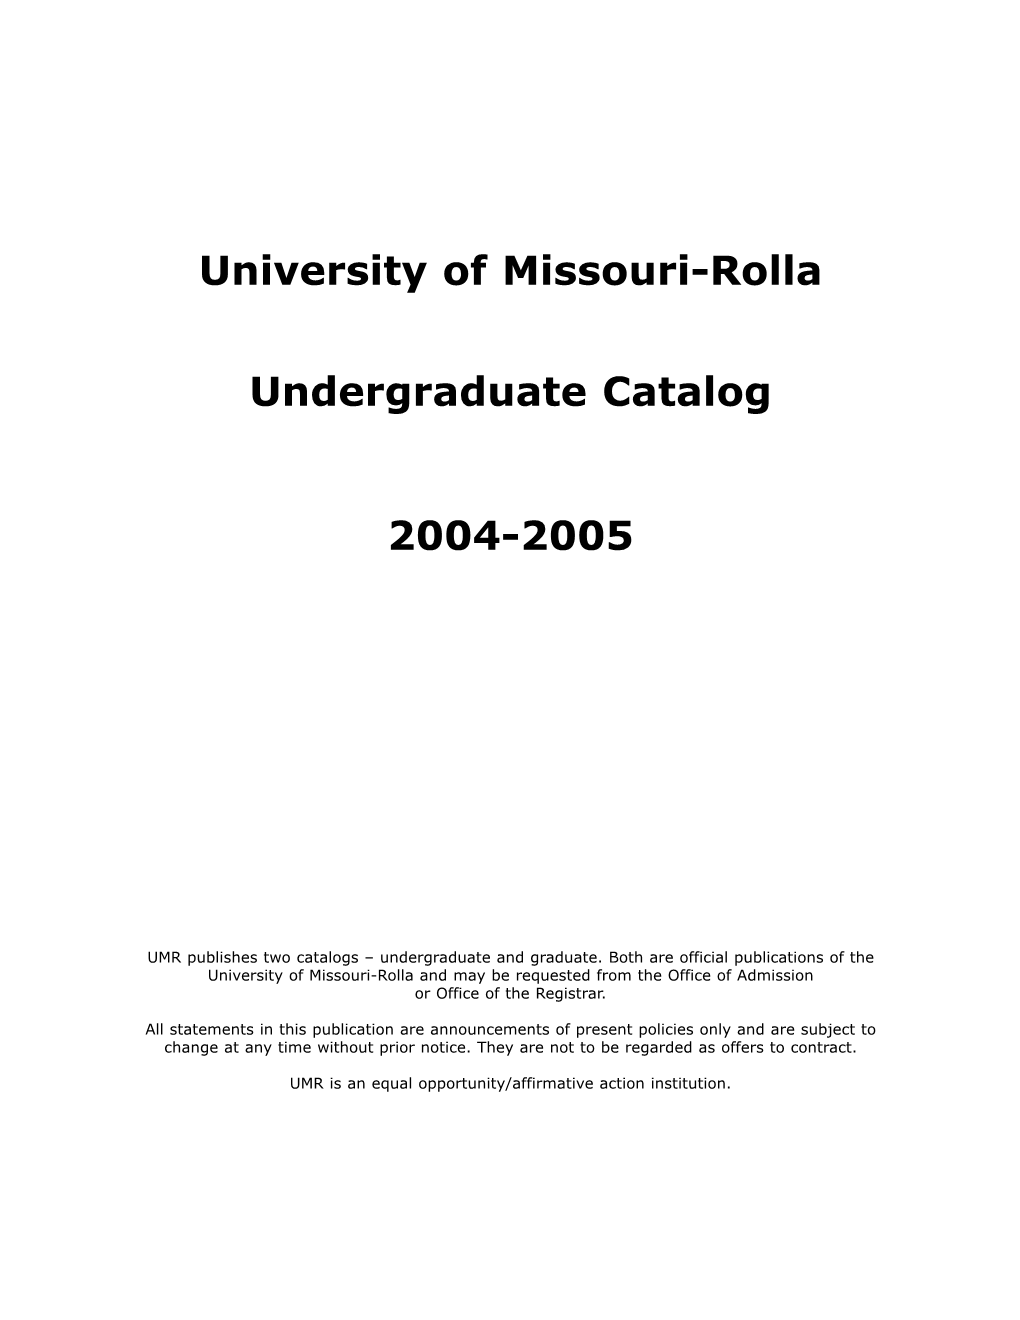 University of Missouri-Rolla Undergraduate Catalog 2004-2005